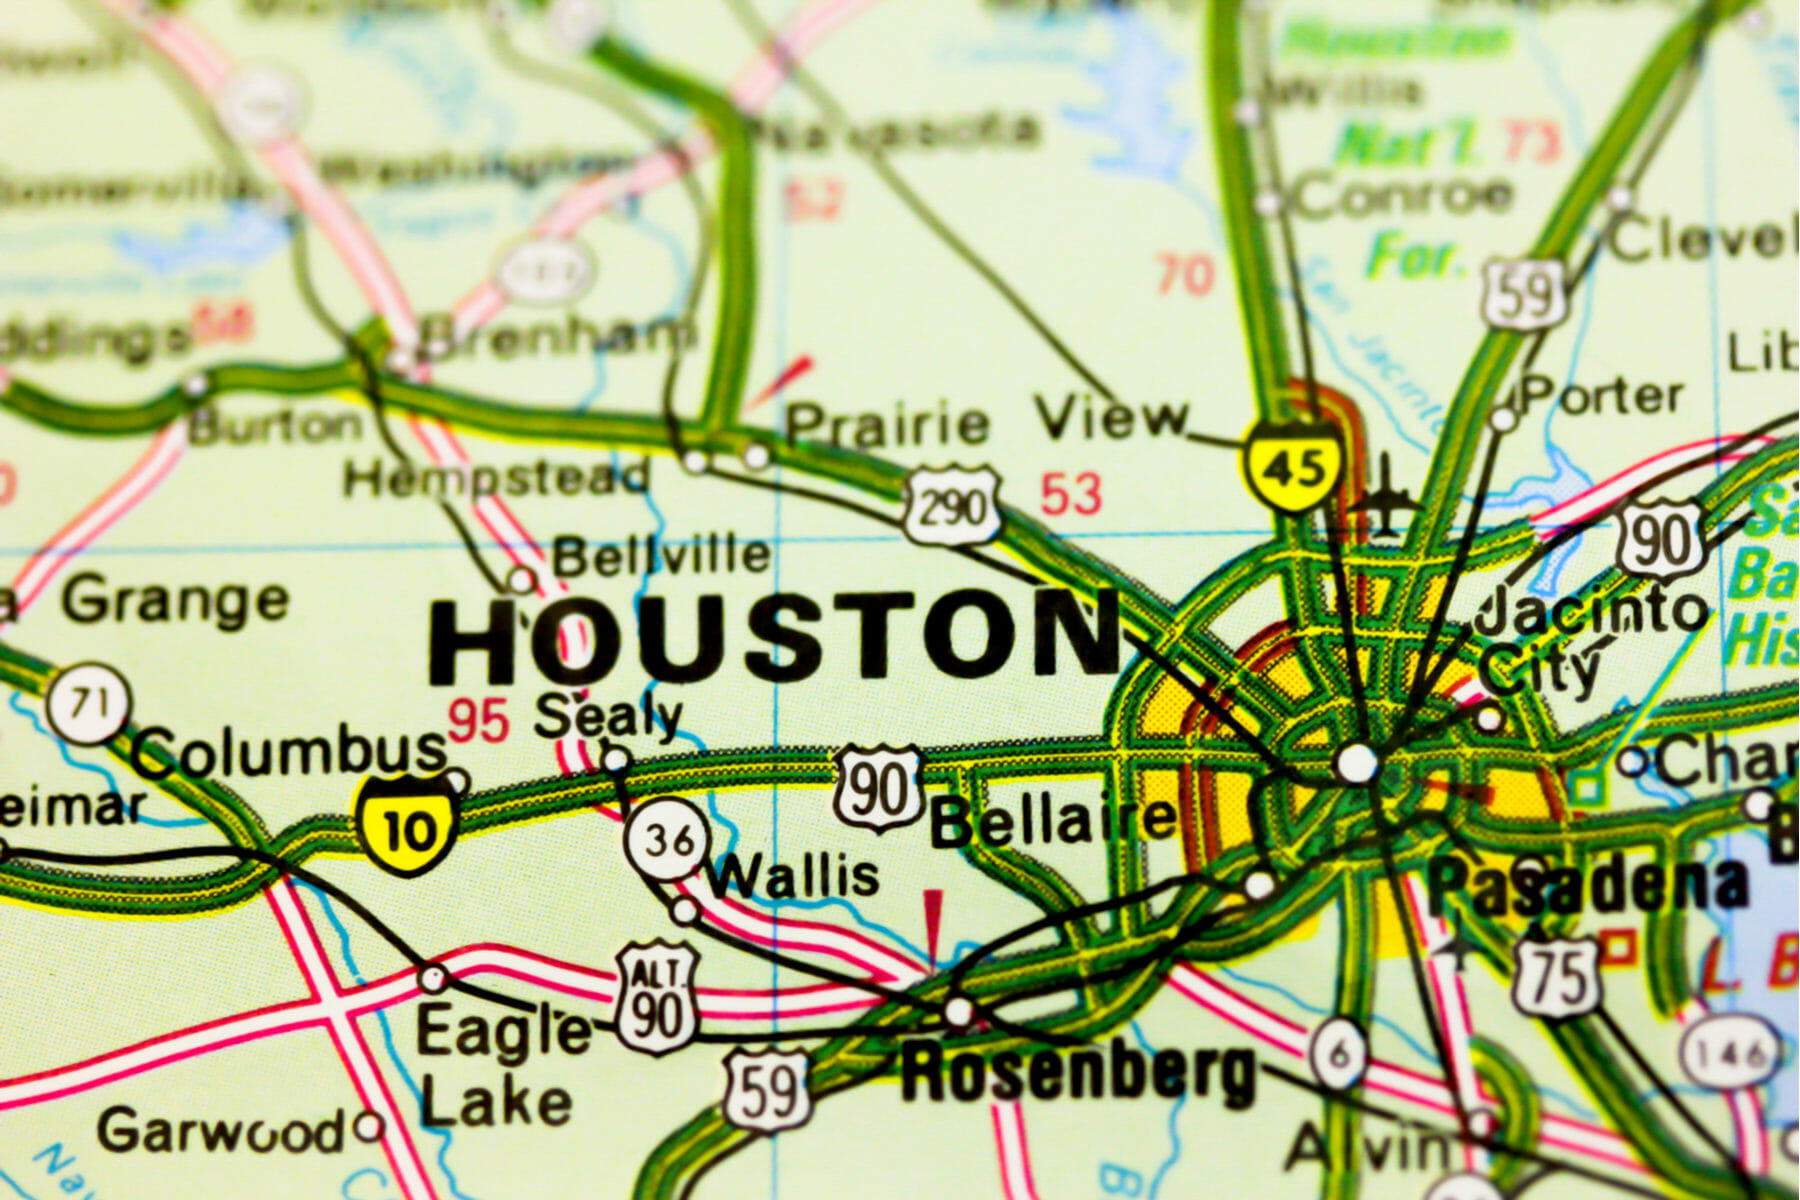 List of Companies Headquartered in Houston - Job Seekers Blog - JobStars USA